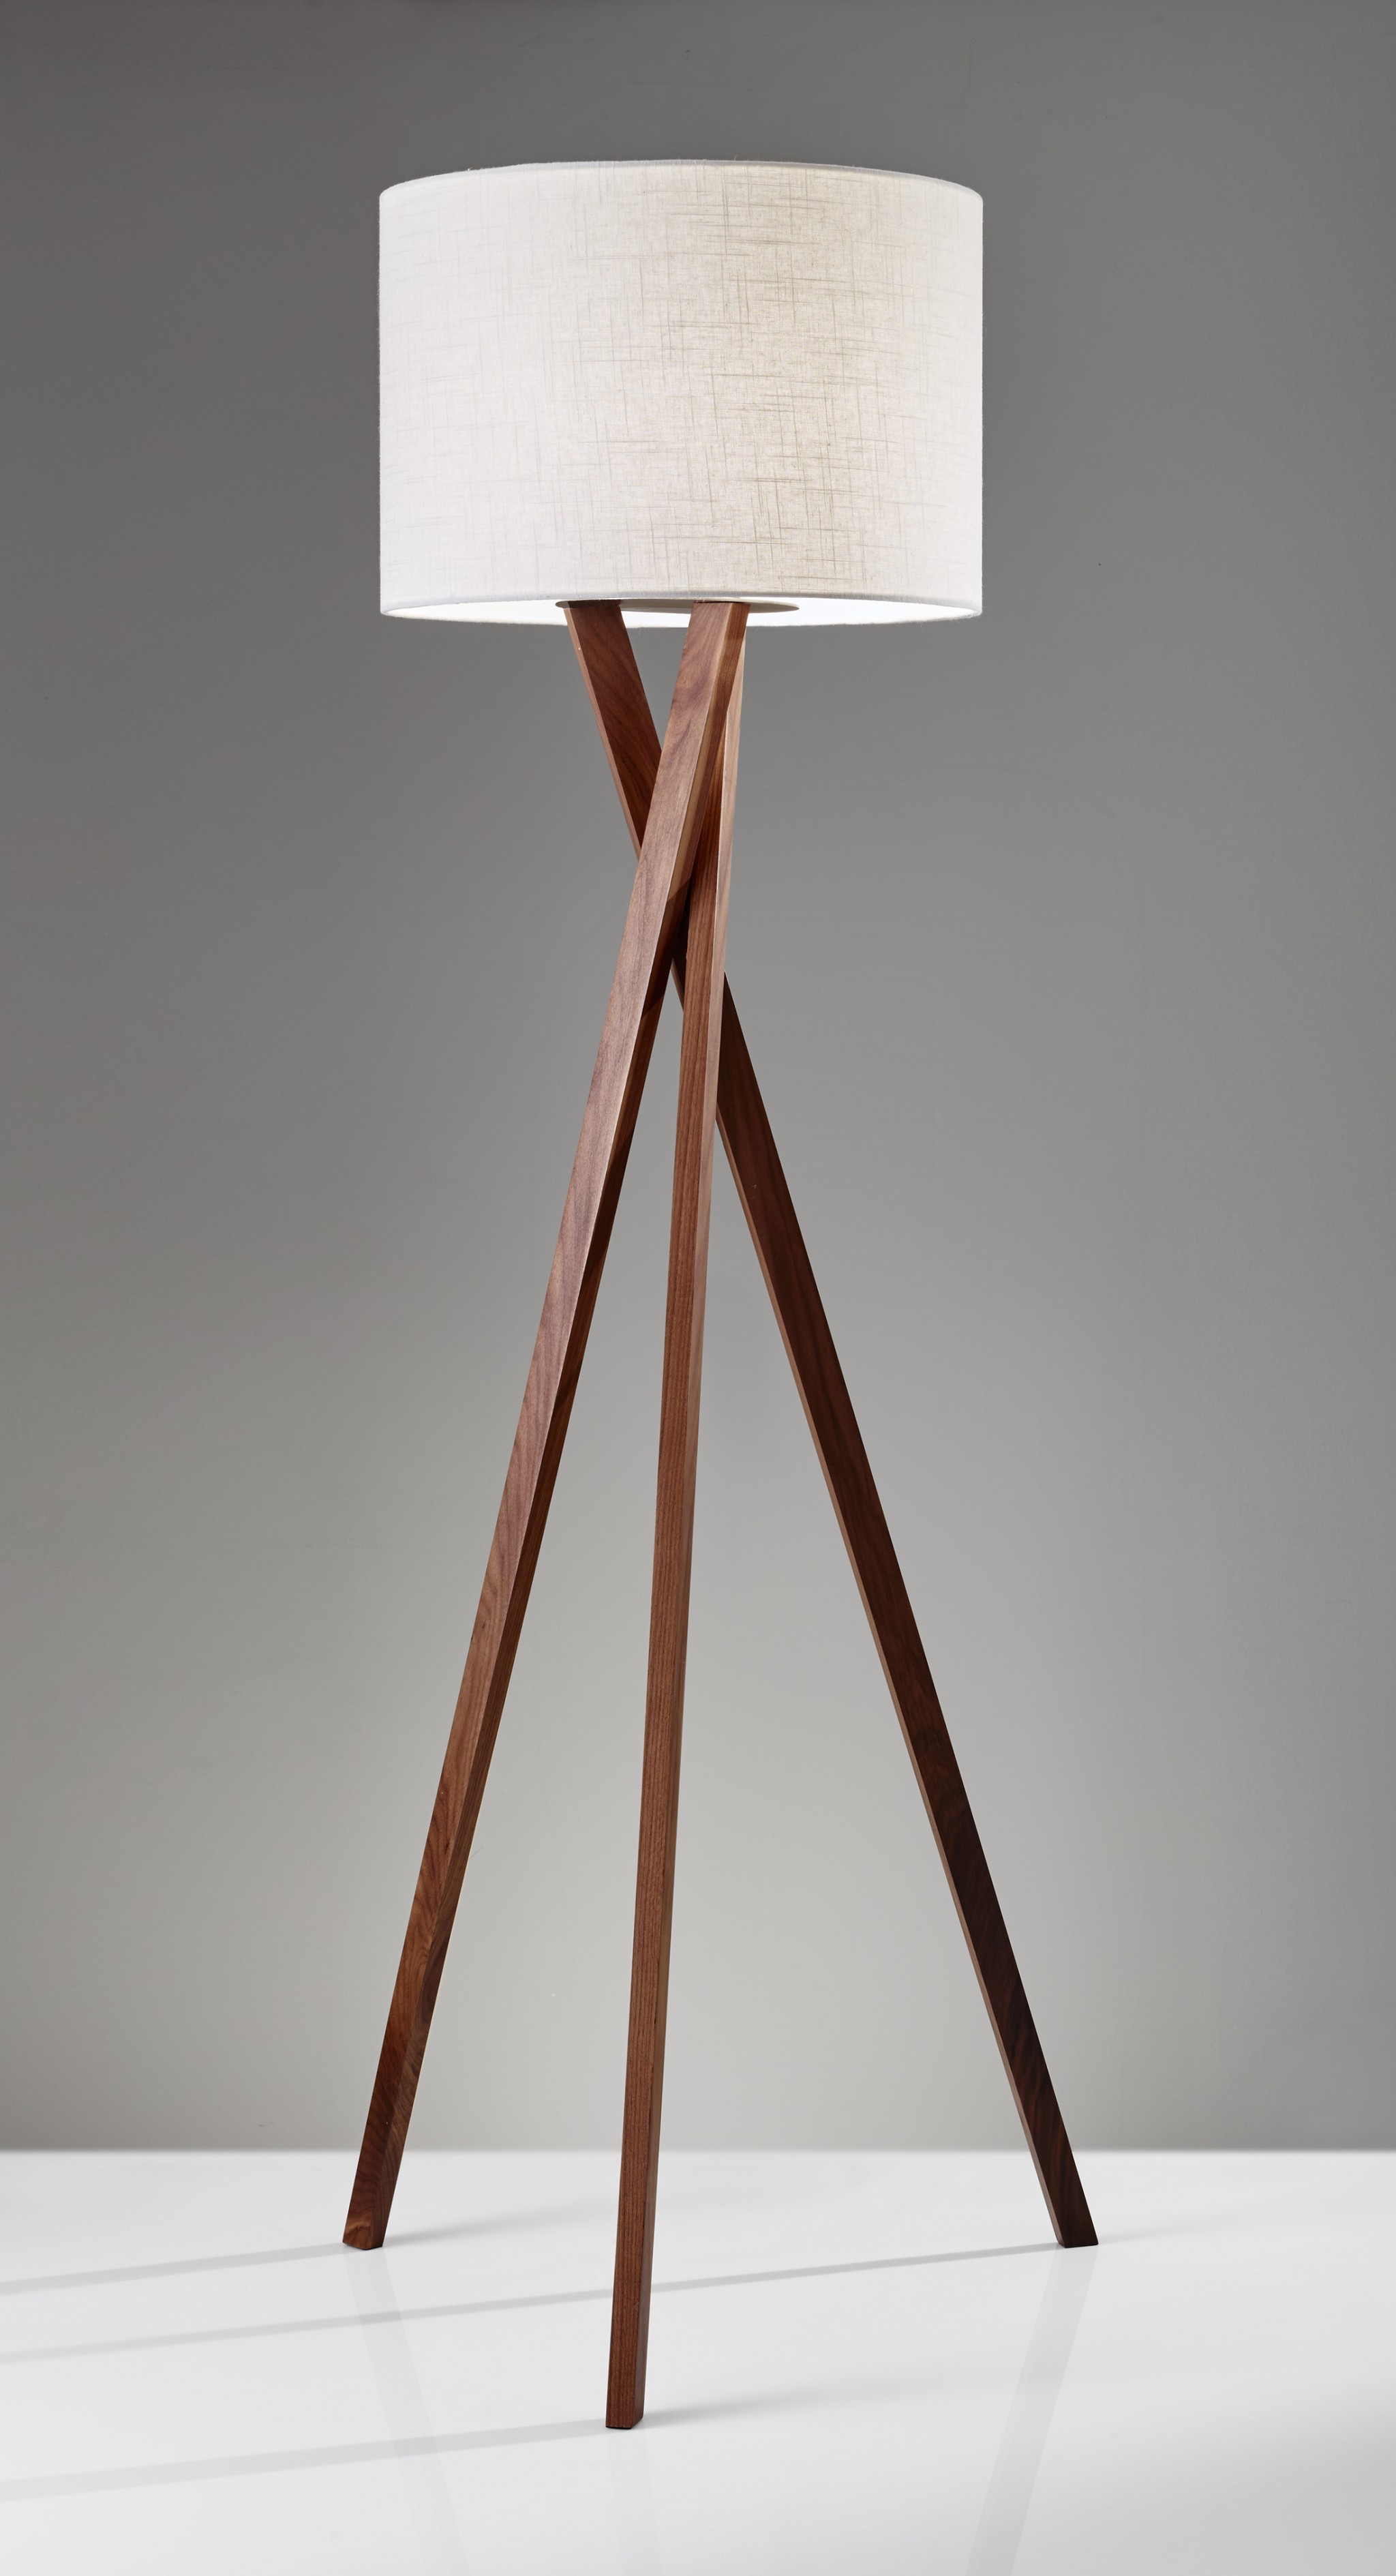 20" X 20" X 63" Walnut Wood Floor Lamp